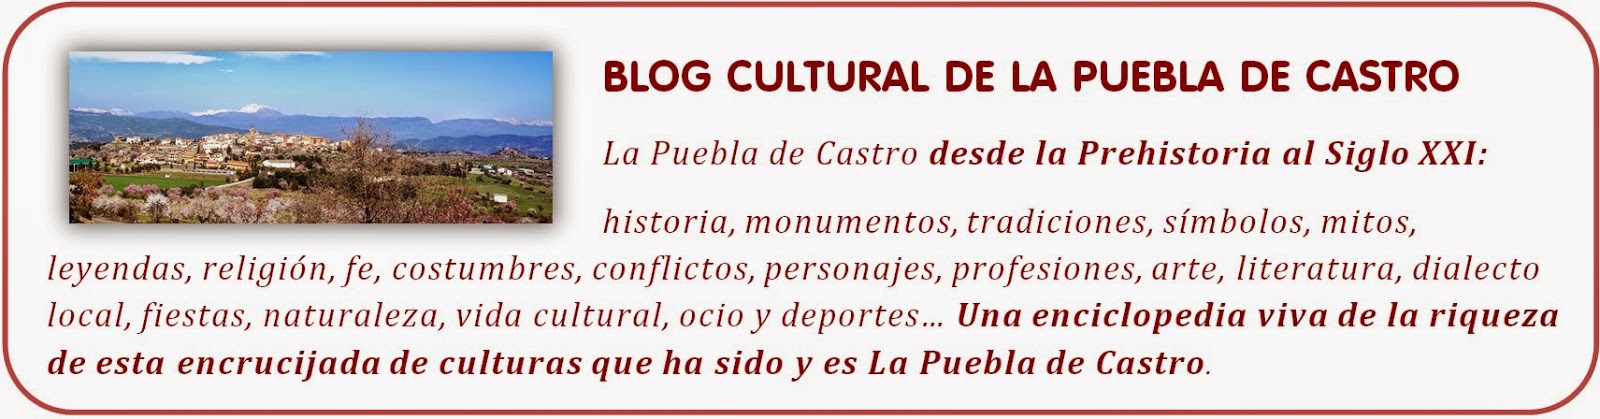 http://puebladecastro.blogspot.com.es/